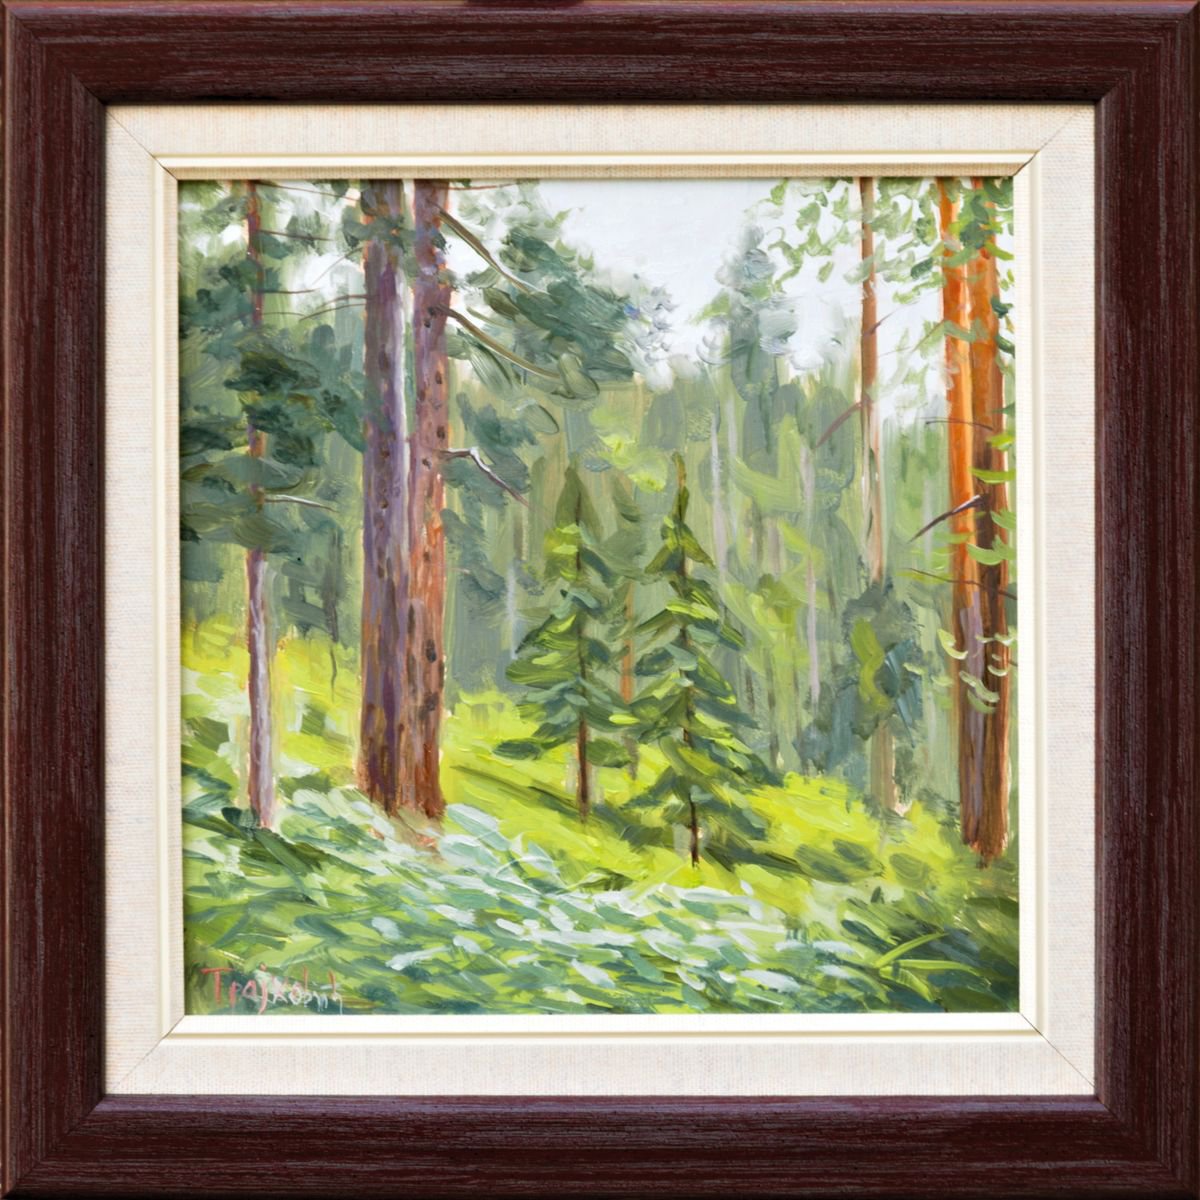 Glade in Pine Forest by Dejan Trajkovic